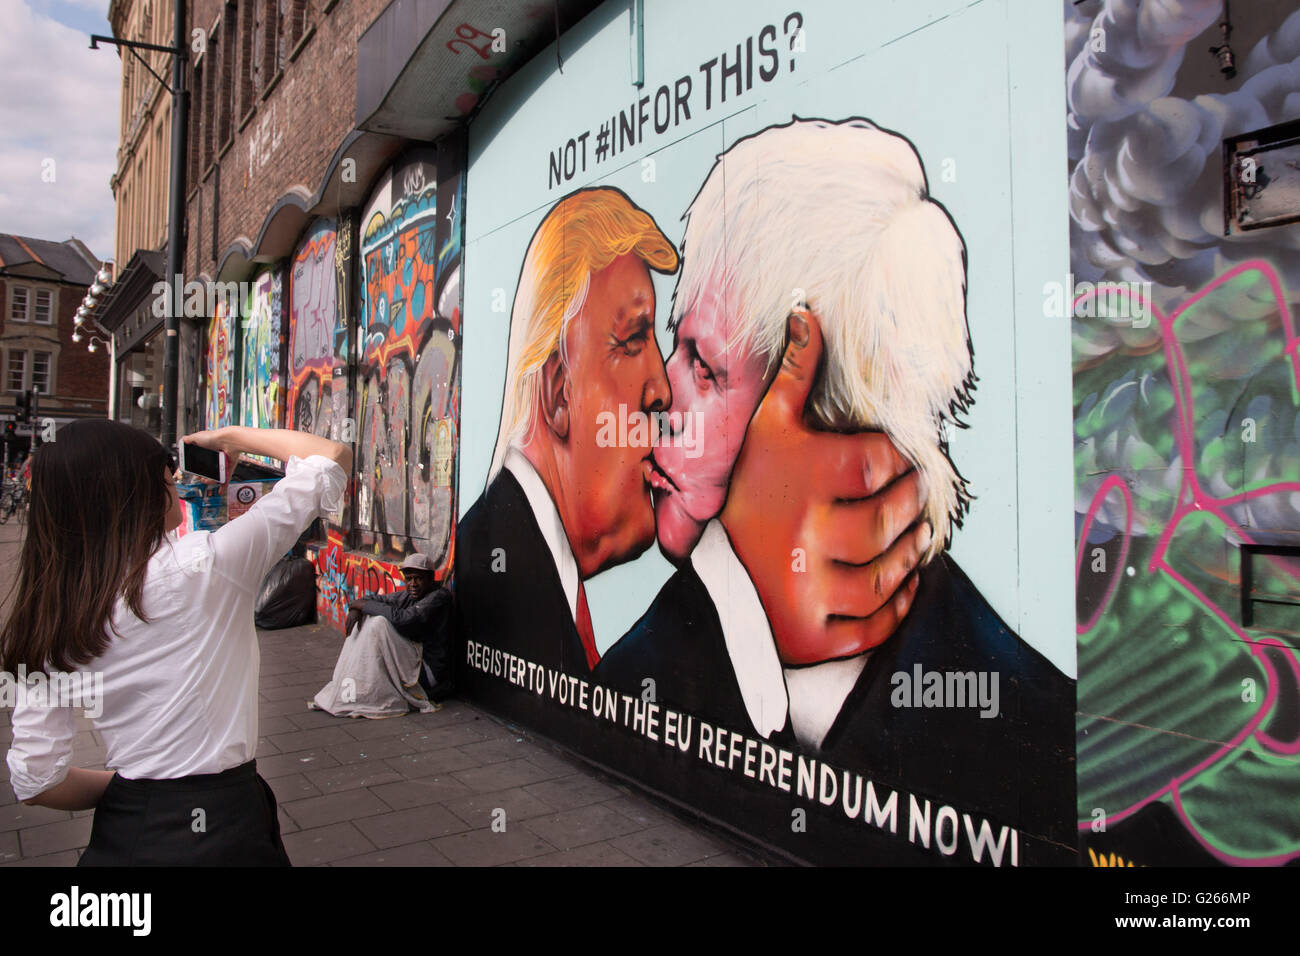 A passerby takes a photo of satirical street art showing Donald Trump kissing Boris Johnson. Stock Photo